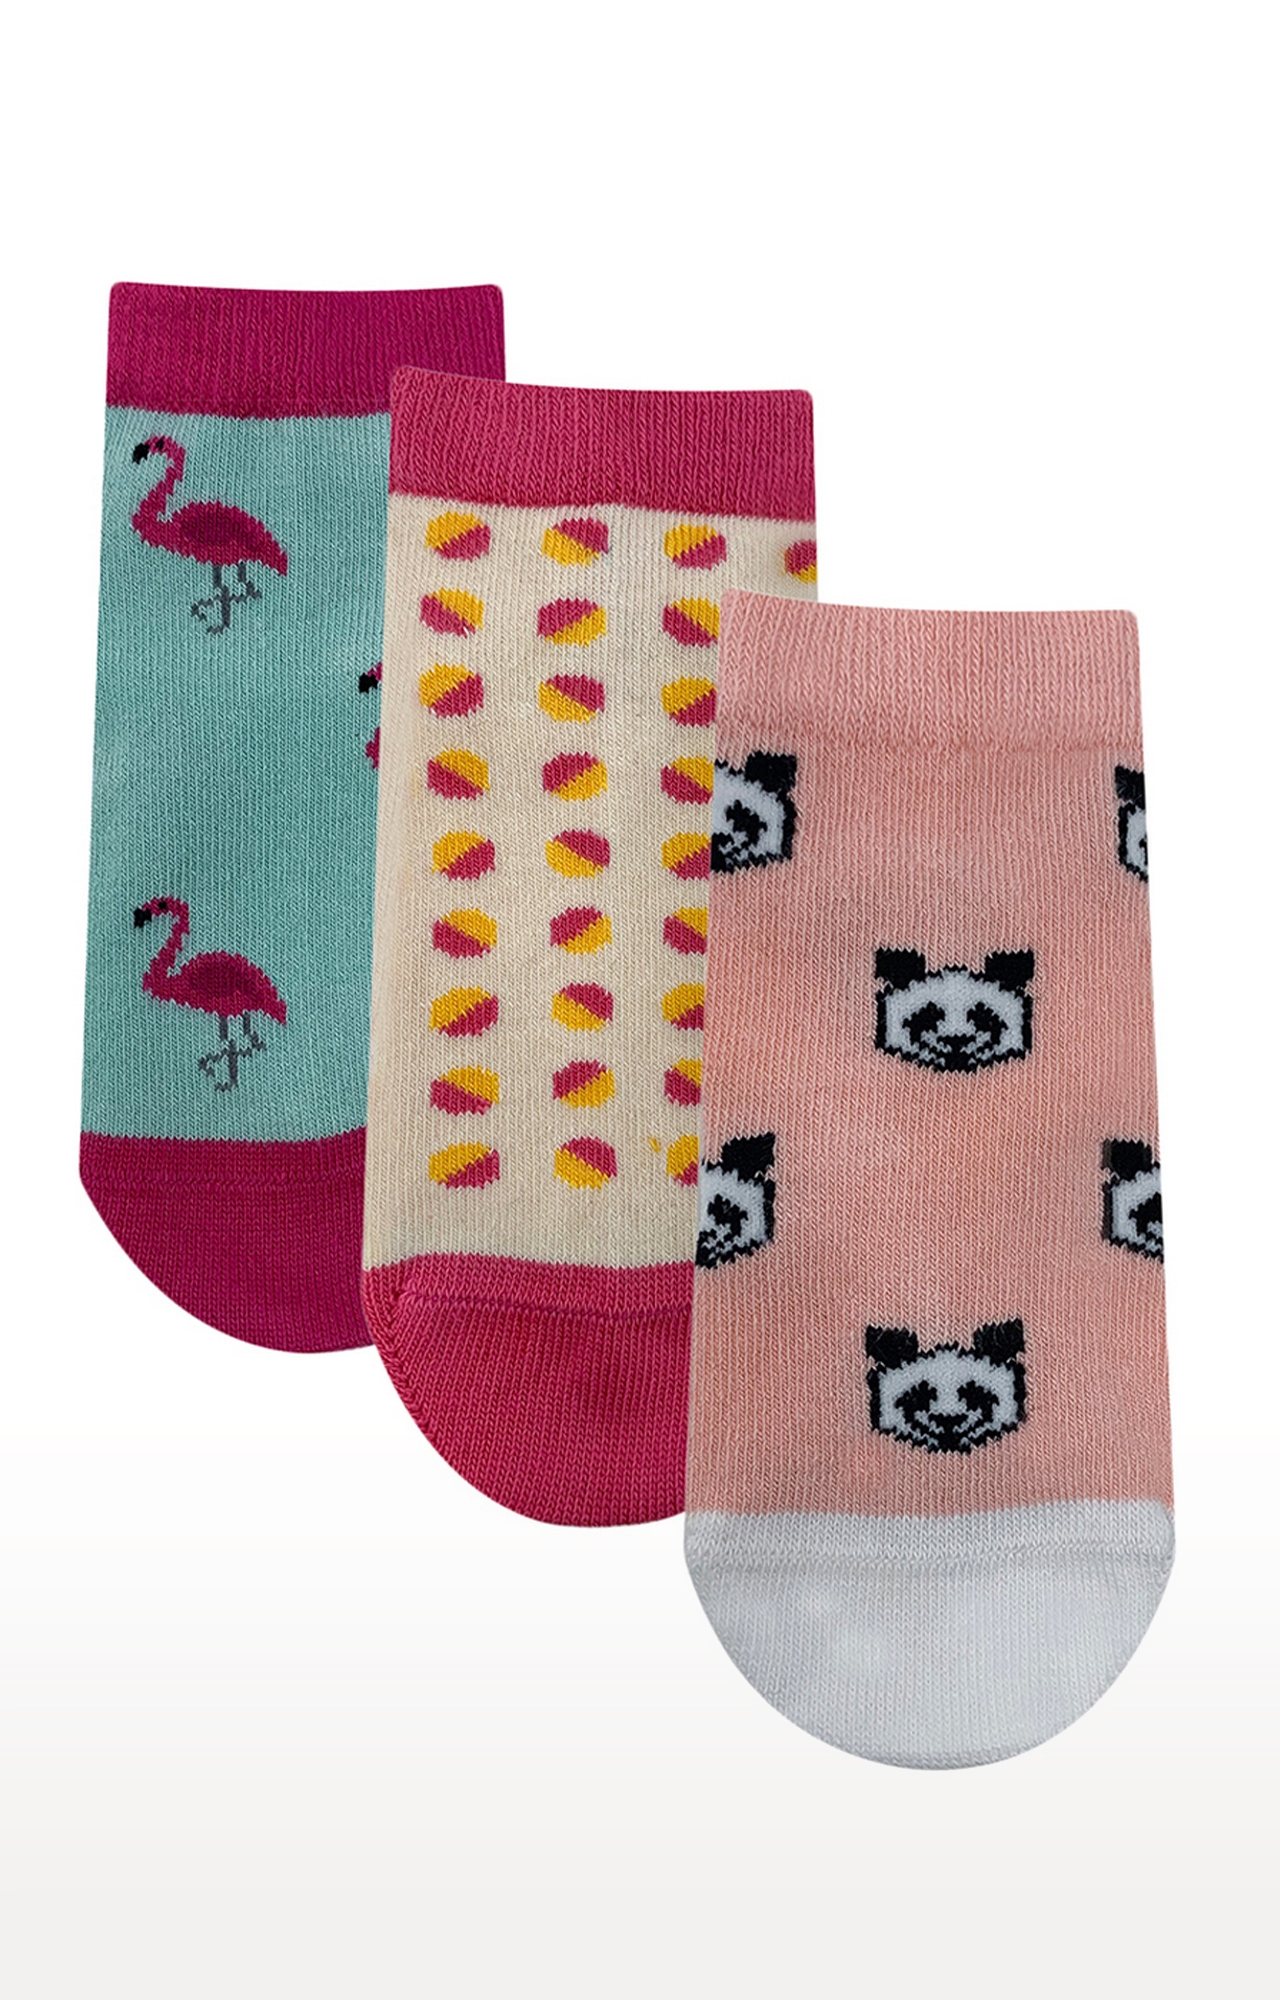 Mint & Oak Pink Delight Cotton Multi Ankle Length Socks for Kids - Pack of 3